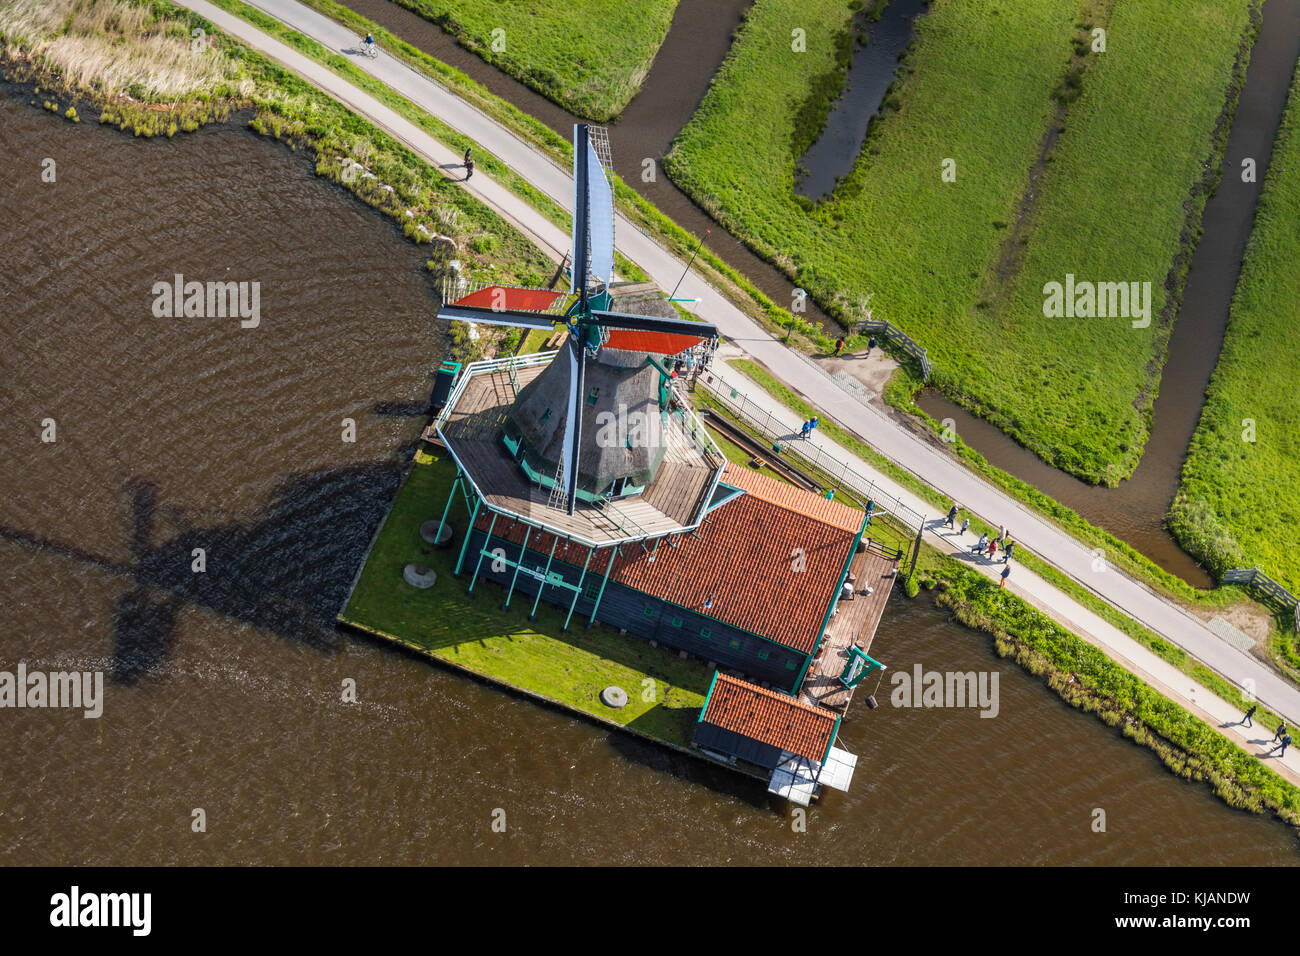 Aerial view of windmills in Zaanse Schans, Netherlands Stock Photo